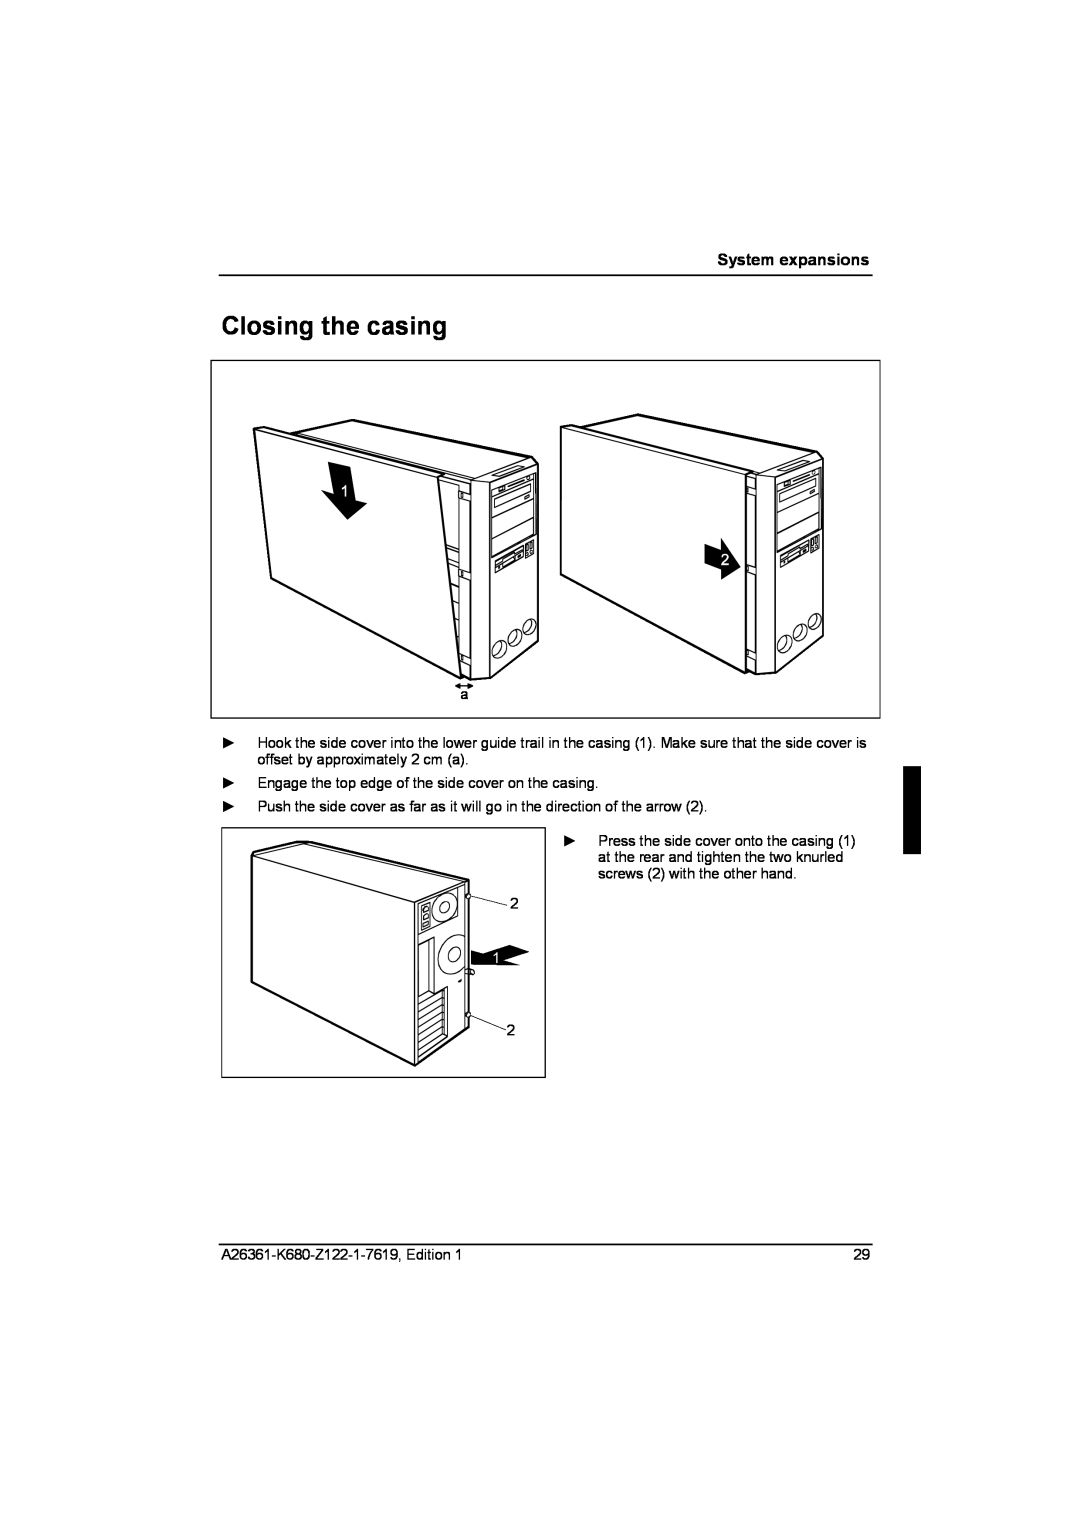 Fujitsu R630, V810 manual Closing the casing, System expansions 